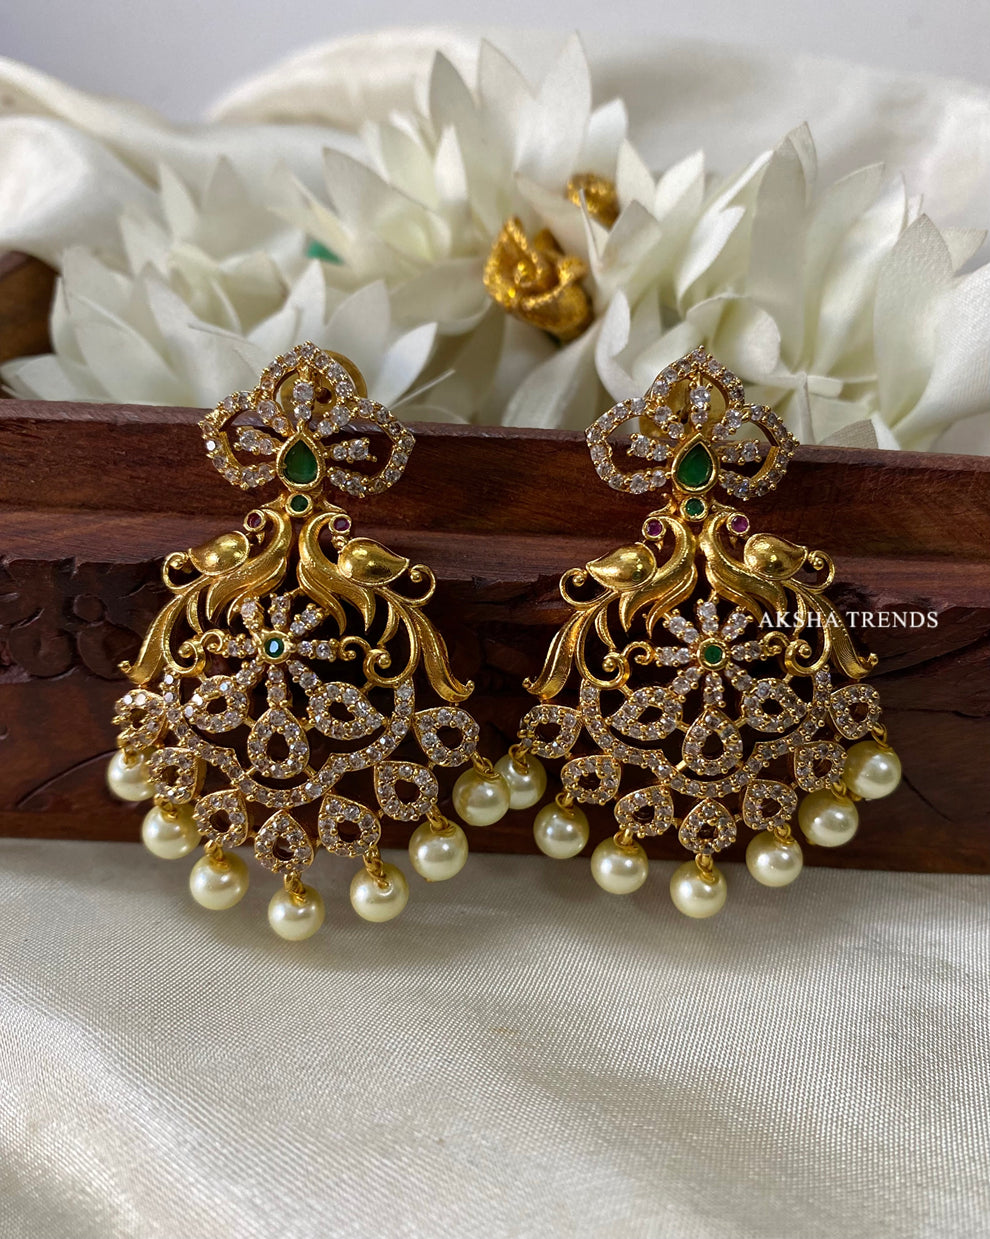 Thogai diamond earrings Aksha Trends 